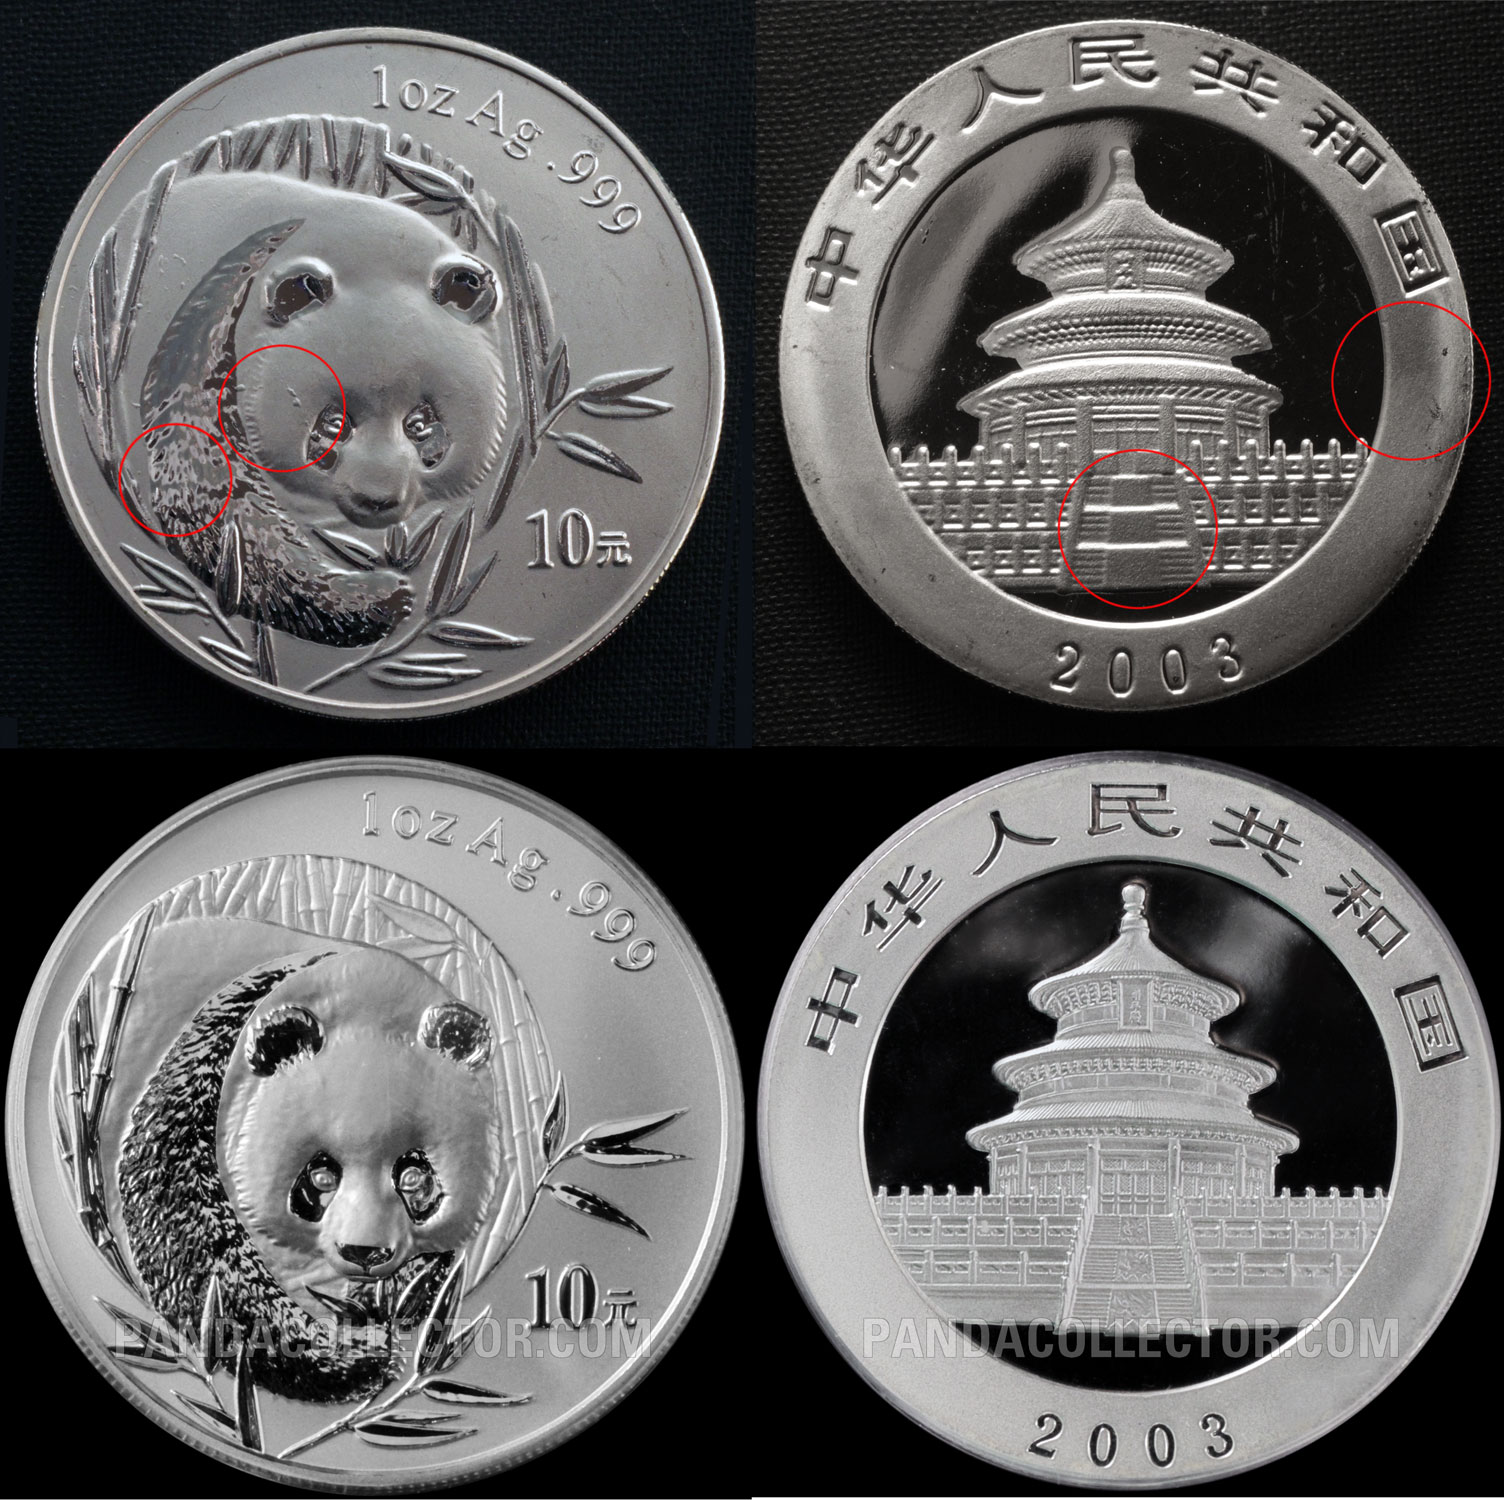 Counterfeit silver Panda 1993